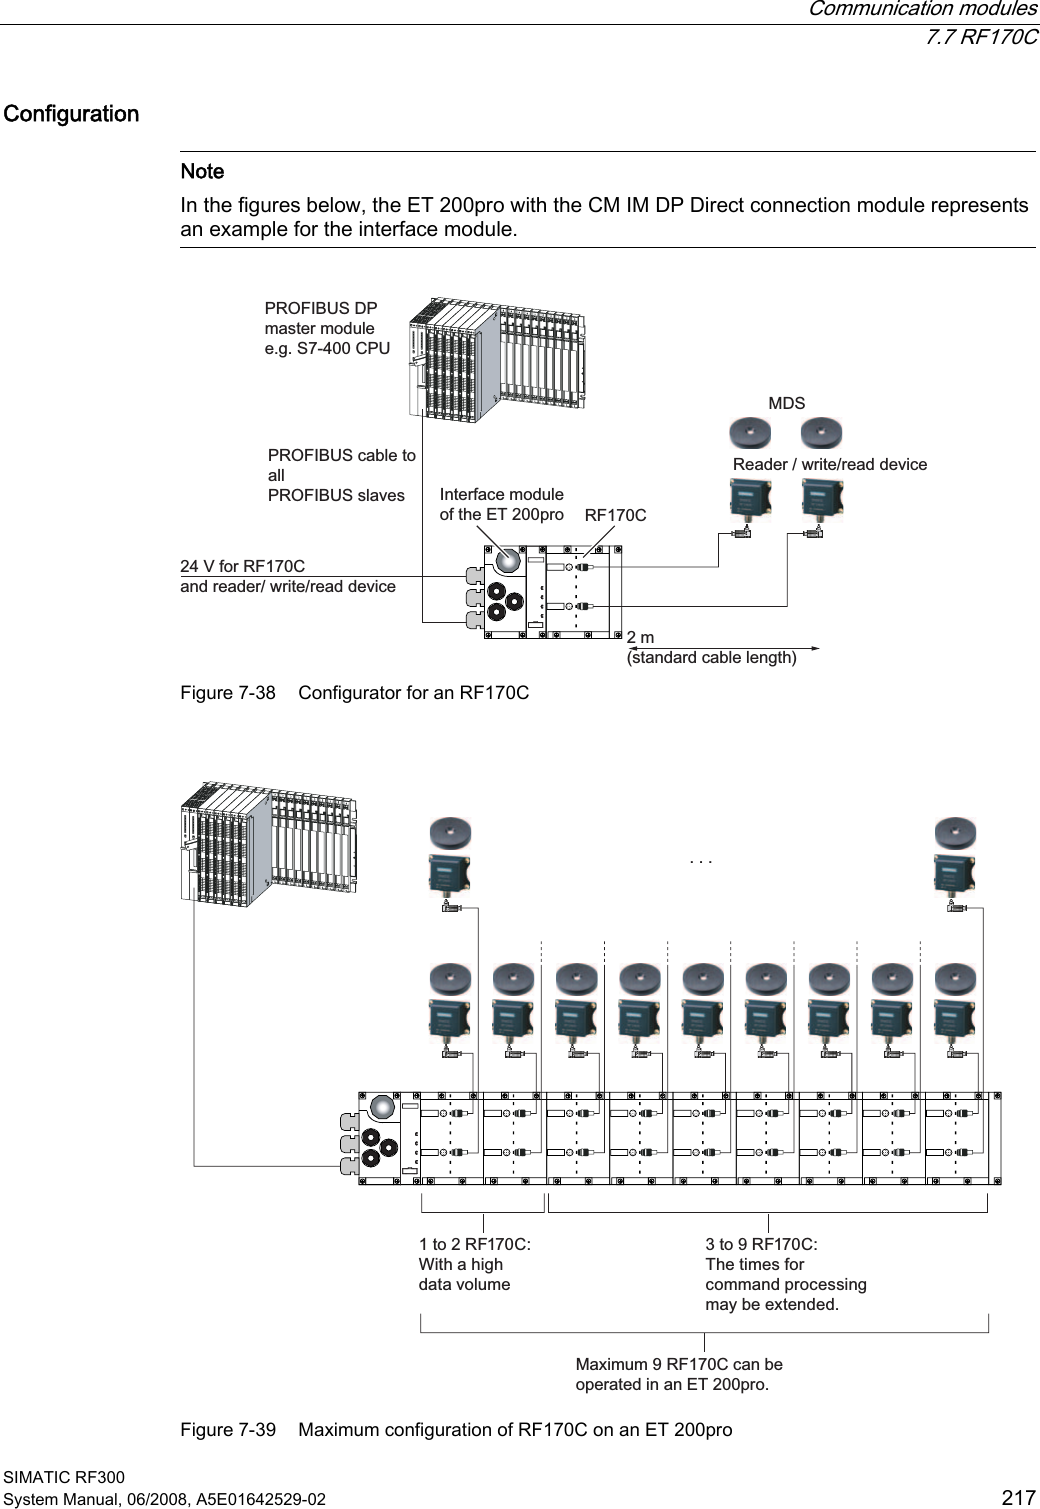  Communication modules  7.7 RF170C SIMATIC RF300 System Manual, 06/2008, A5E01642529-02  217 Configuration   Note In the figures below, the ET 200pro with the CM IM DP Direct connection module represents an example for the interface module.   352),%86&apos;3PDVWHUPRGXOHHJ6&amp;38PVWDQGDUGFDEOHOHQJWK352),%86FDEOHWRDOO352),%86VODYHV9IRU5)&amp;DQGUHDGHUZULWHUHDGGHYLFH,QWHUIDFHPRGXOHRIWKH(7SUR5HDGHUZULWHUHDGGHYLFH0&apos;65)&amp; Figure 7-38  Configurator for an RF170C  WR5)&amp;:LWKDKLJKGDWDYROXPHWR5)&amp;7KHWLPHVIRUFRPPDQGSURFHVVLQJPD\EHH[WHQGHG0D[LPXP5)&amp;FDQEHRSHUDWHGLQDQ(7SUR Figure 7-39  Maximum configuration of RF170C on an ET 200pro 